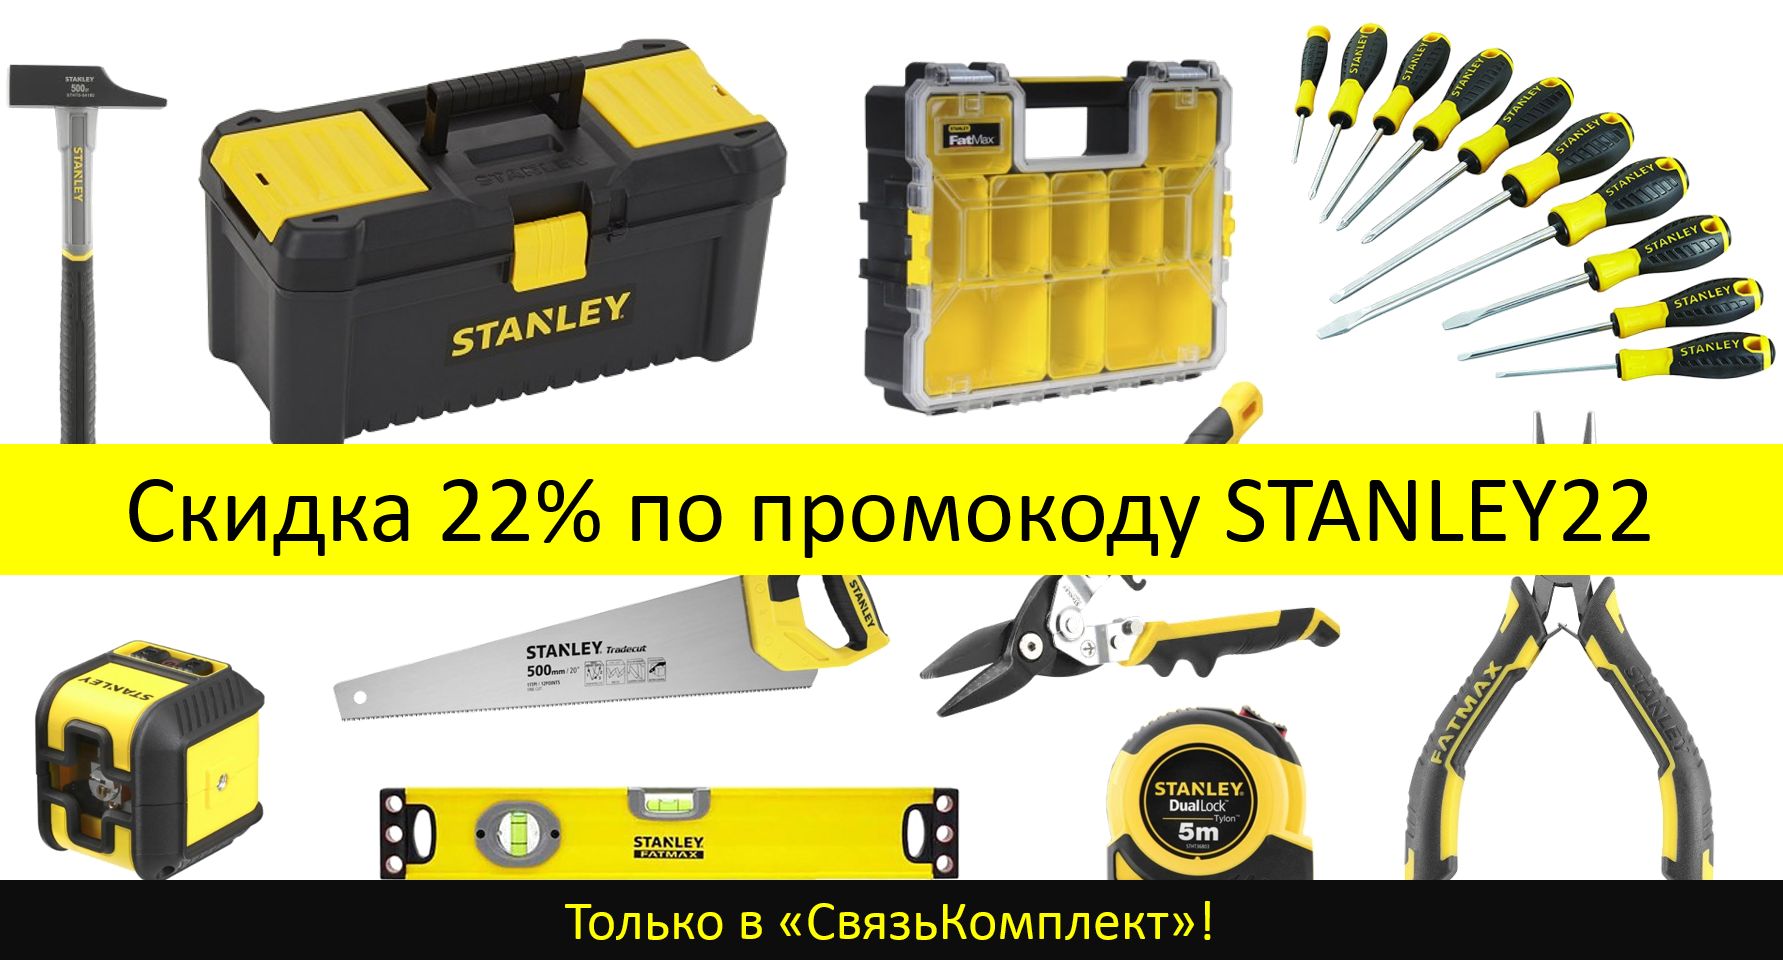 Скидка 22% на ручной инструмент Stanley при онлайн заказе!